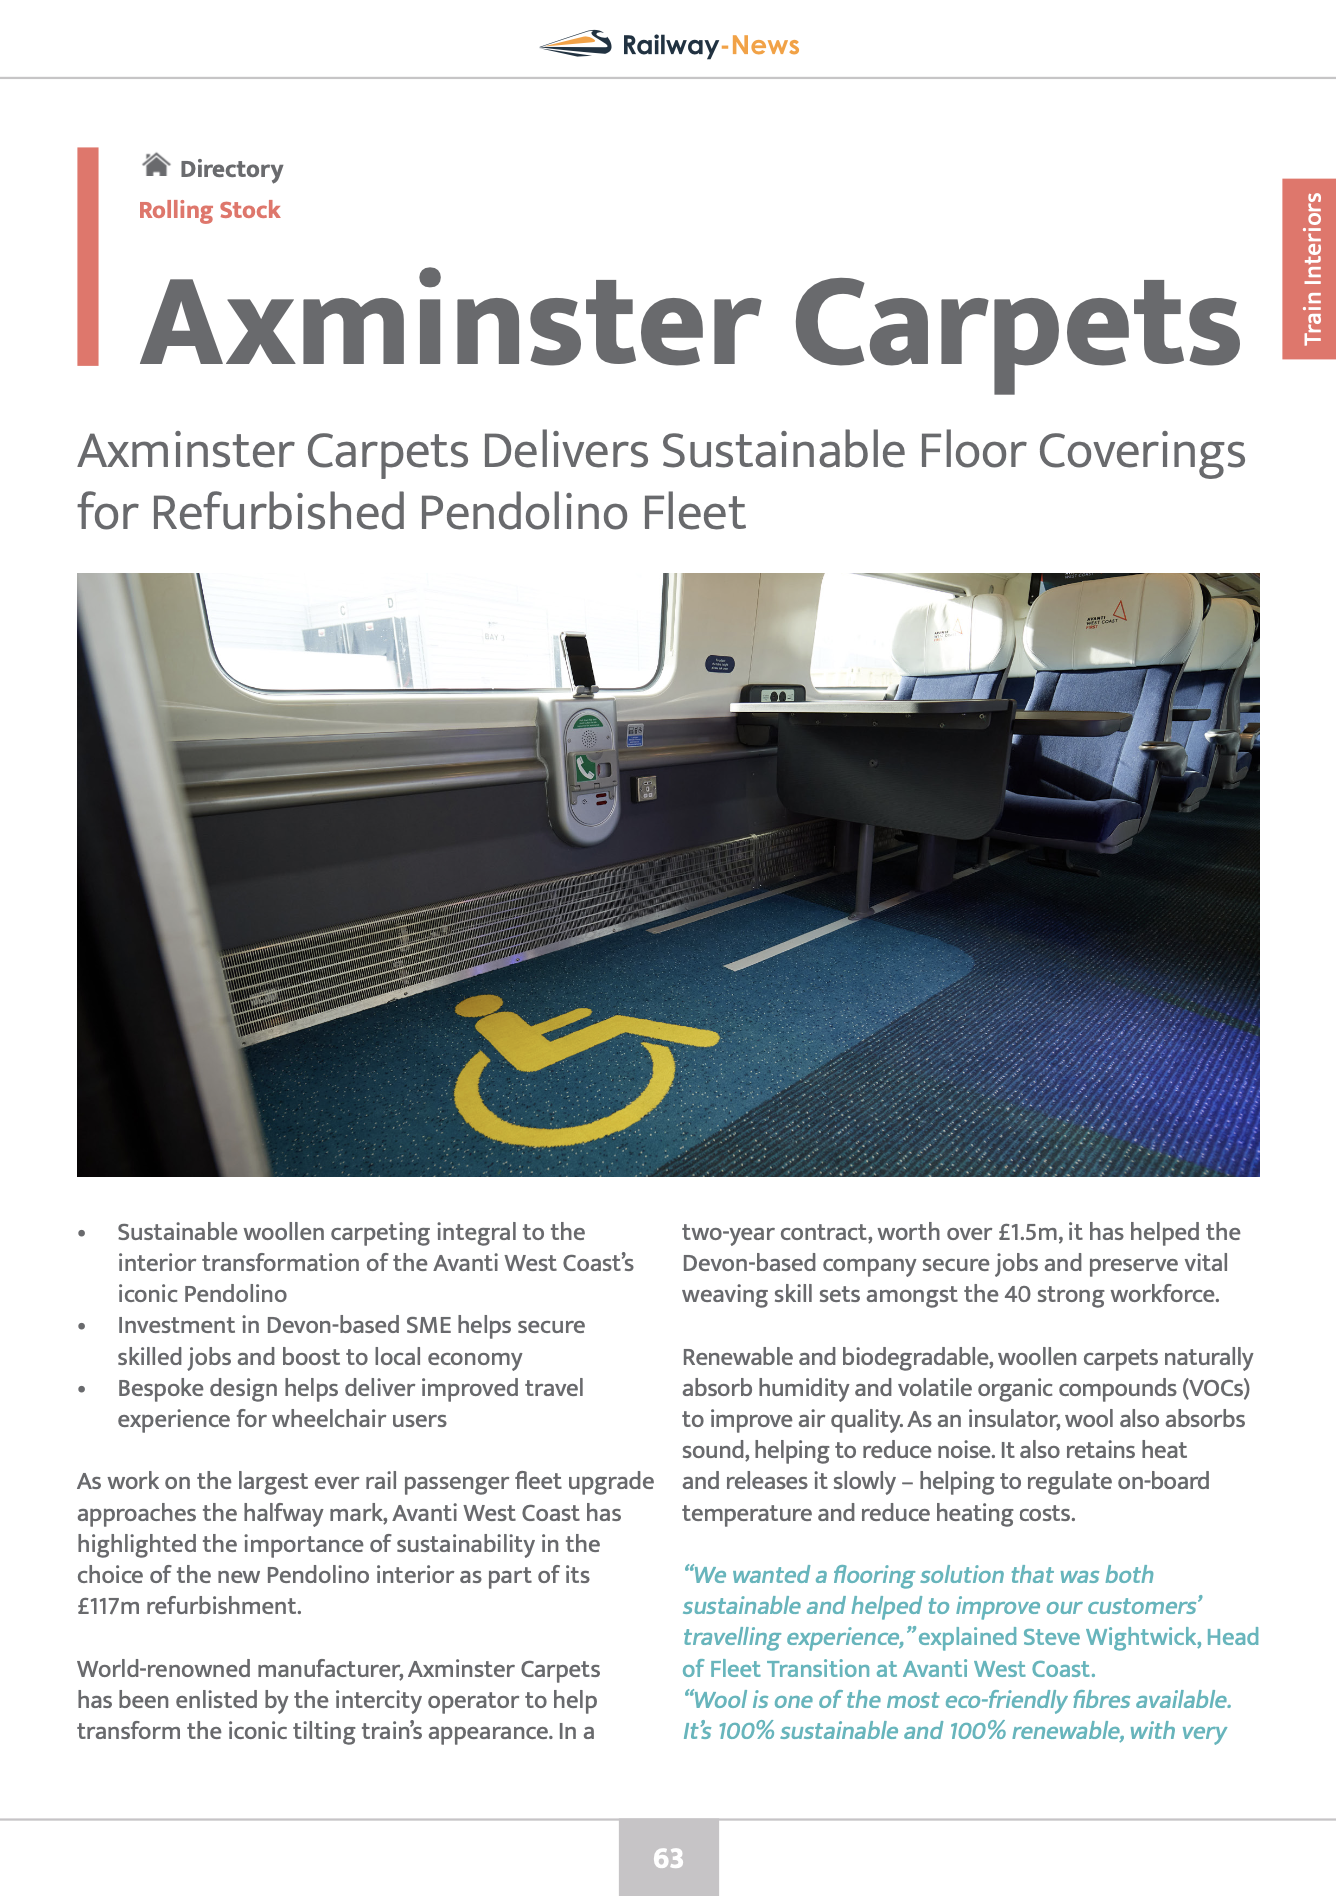 Axminster Carpets, Belmond British Pullman Renovation